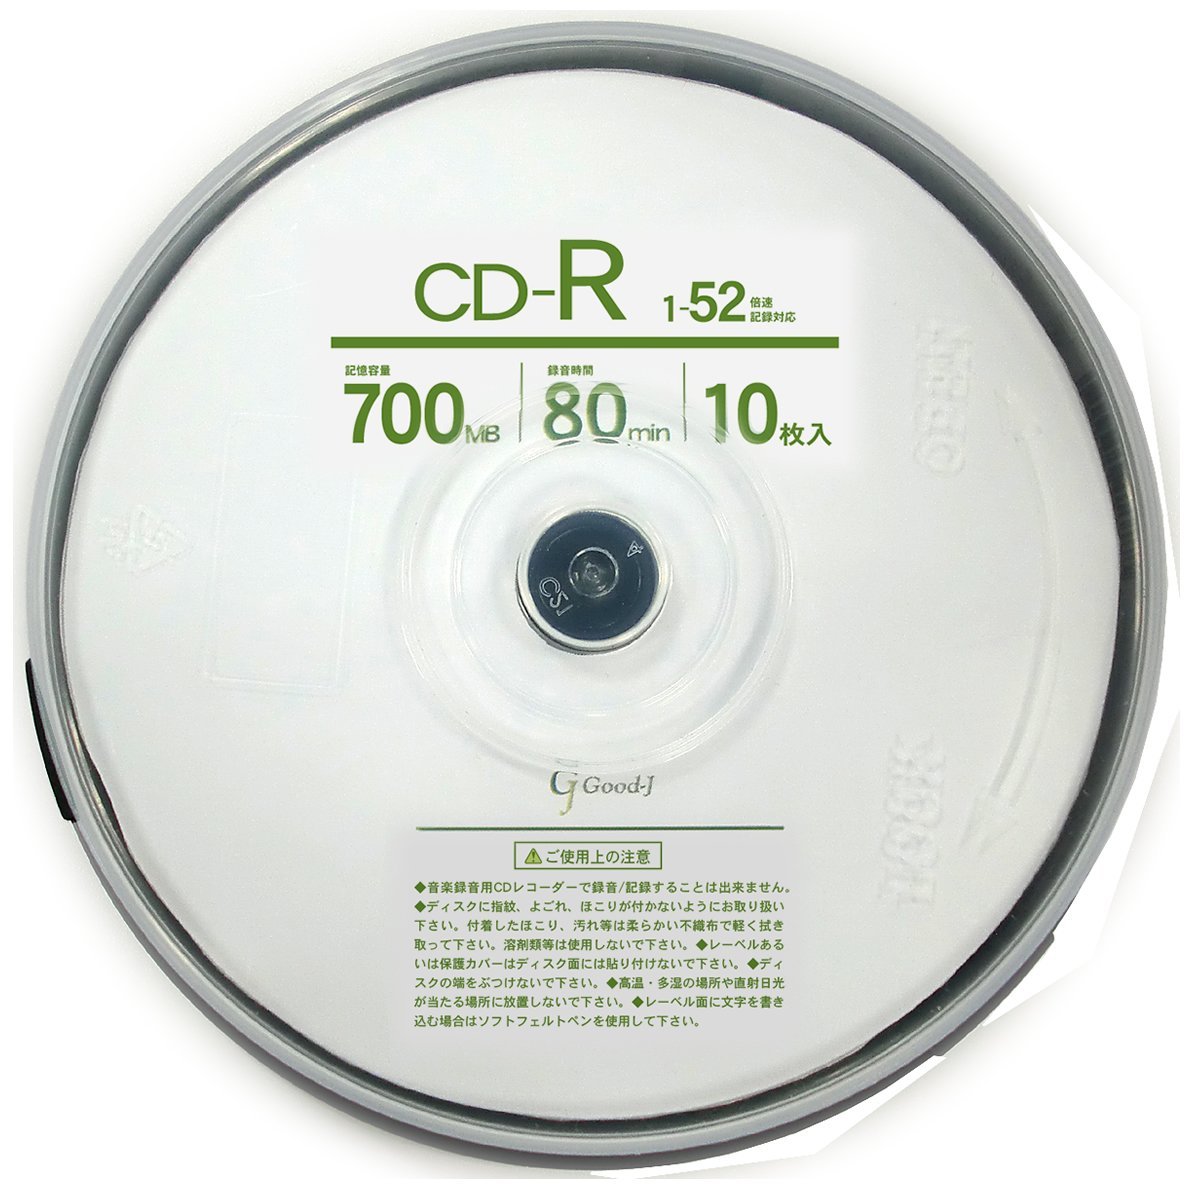 【VENUS】【CD-R】【データ用】【1-52倍速】【700MB】【プリンタブル白】【1…...:auc-armadillo:10004456